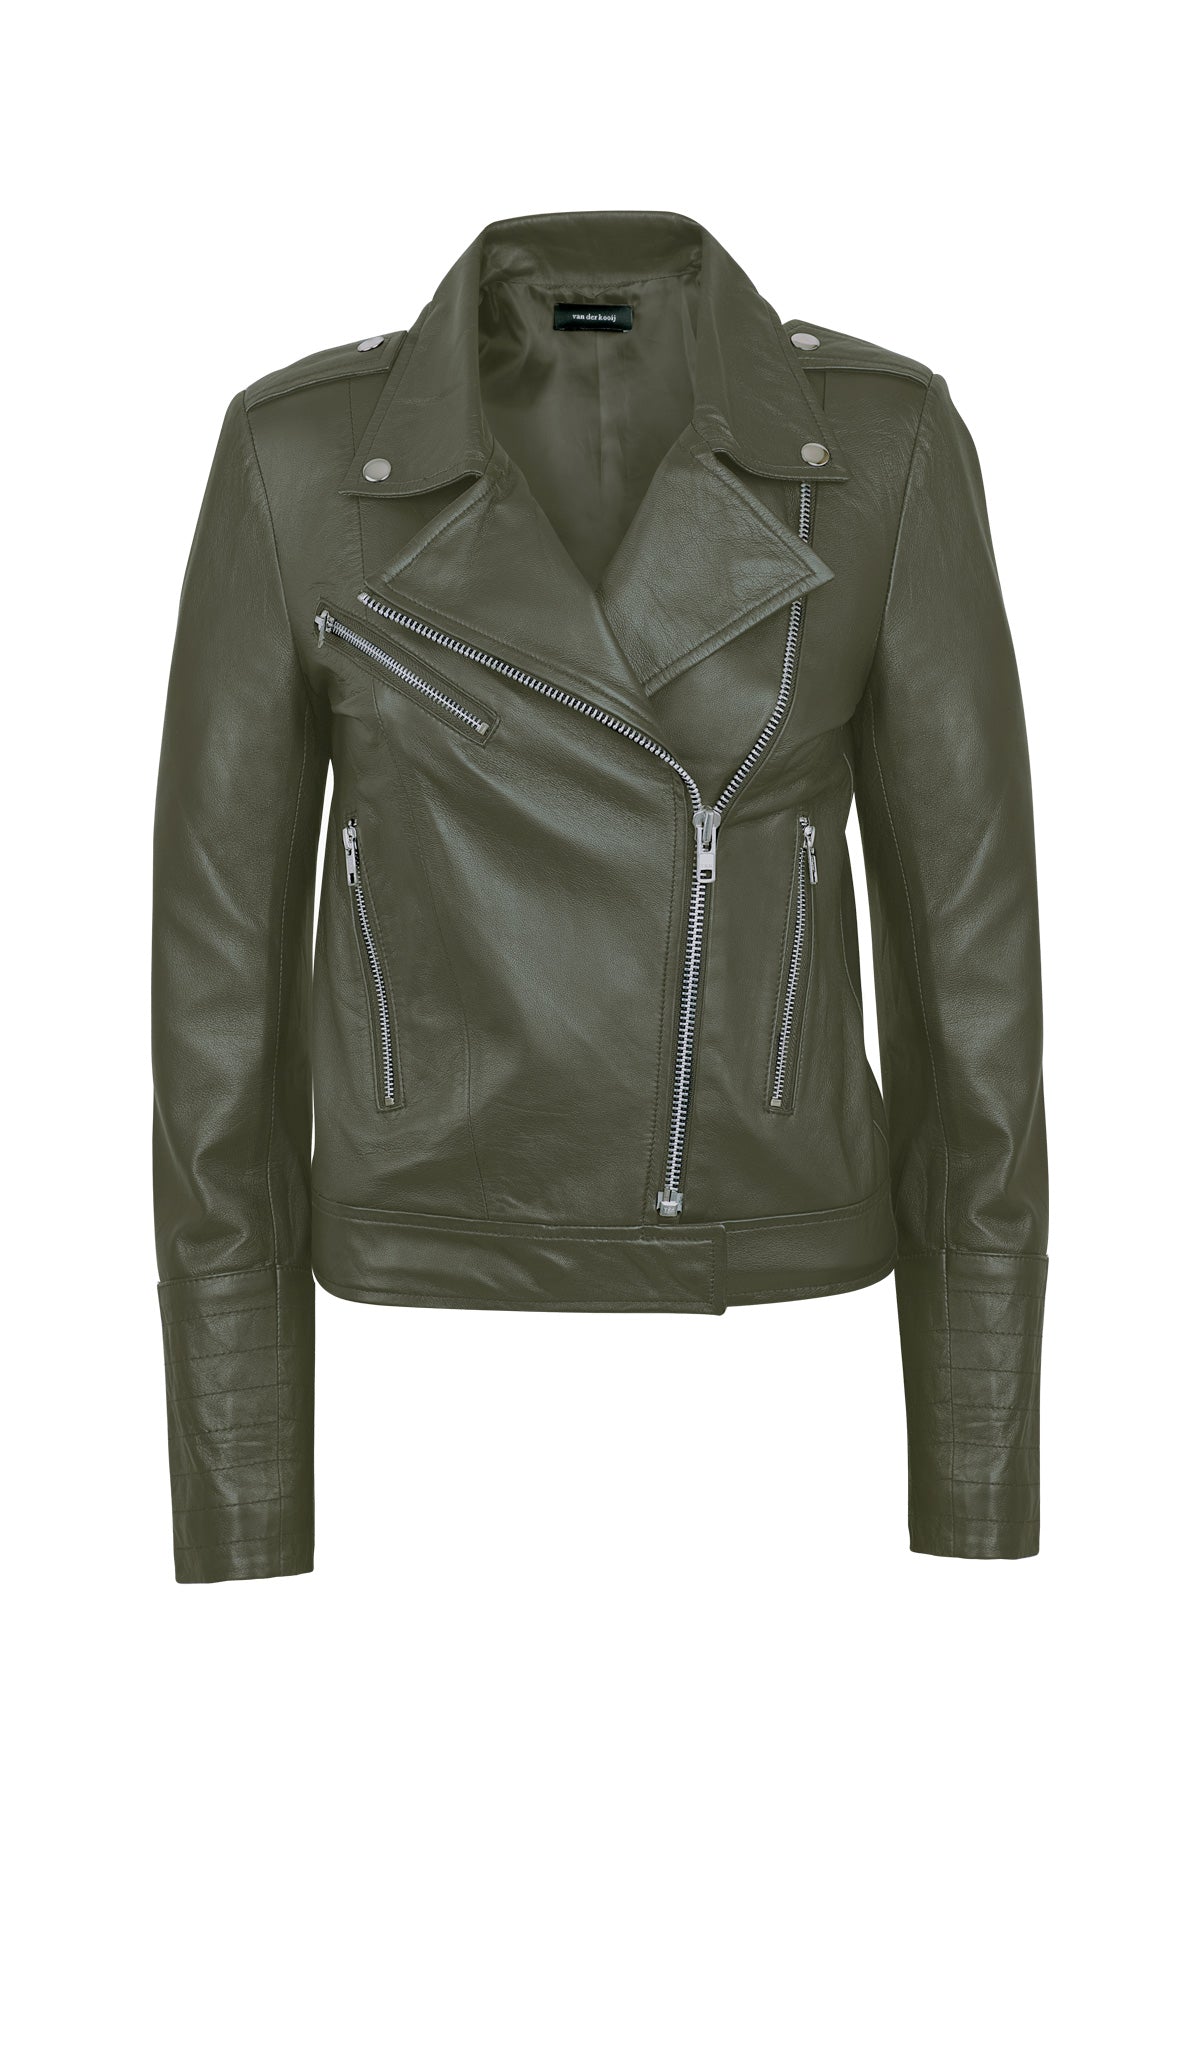 Classic Leather Biker Jacket